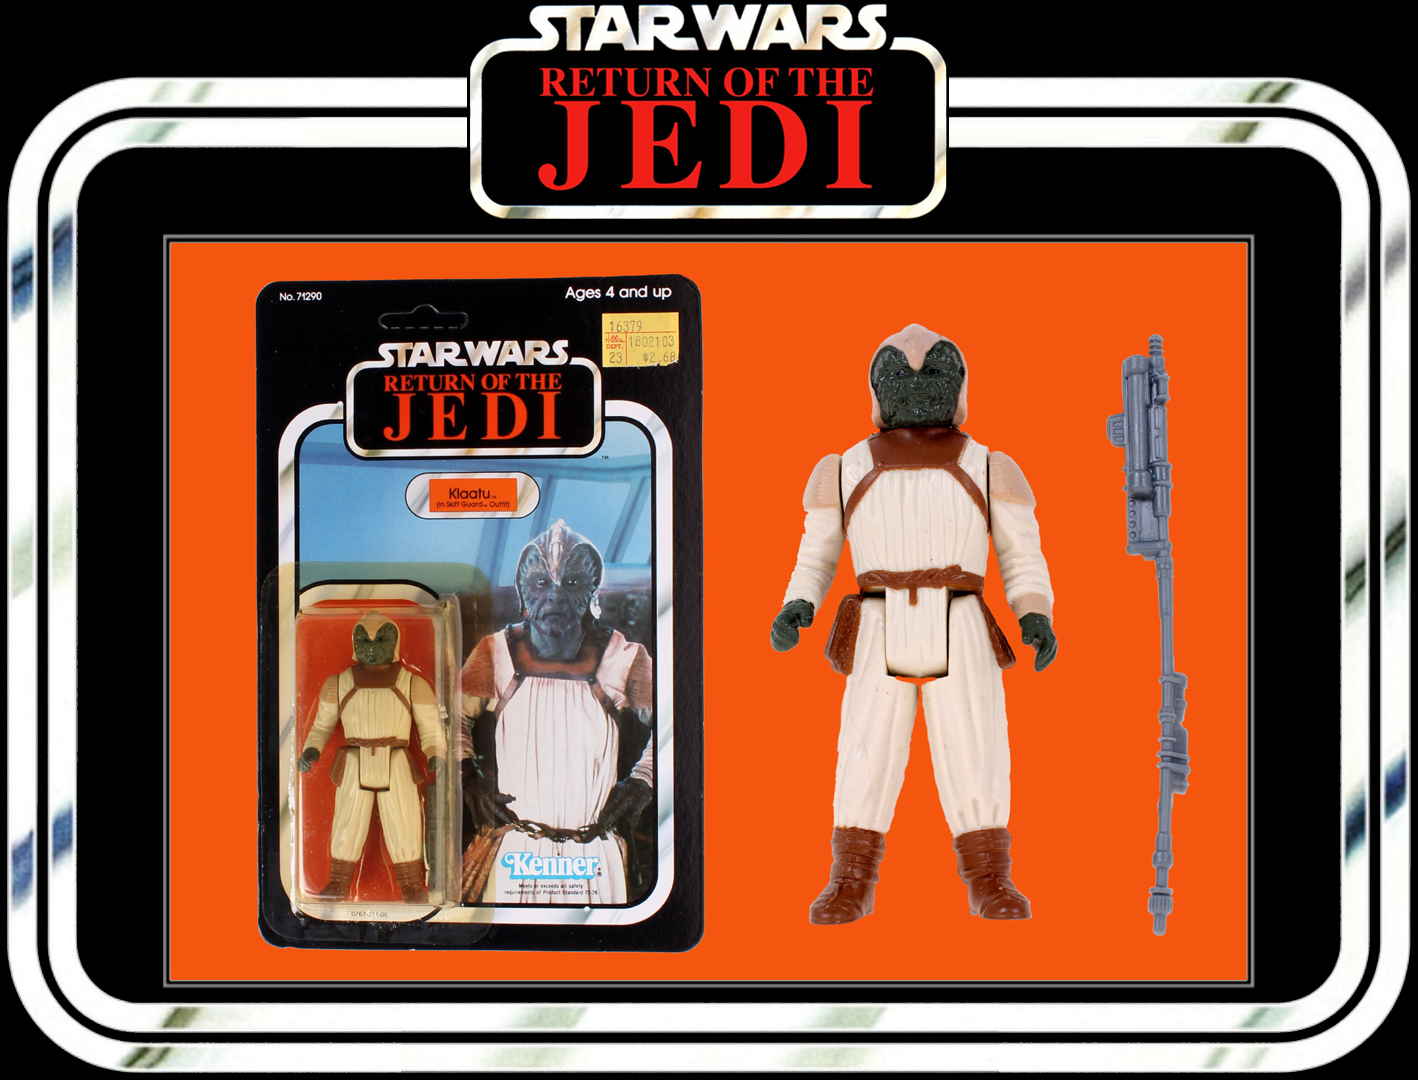 Details about   Vintage Kenner Star Wars Return of the Jedi ROTJ Teebo Ewok Original Card